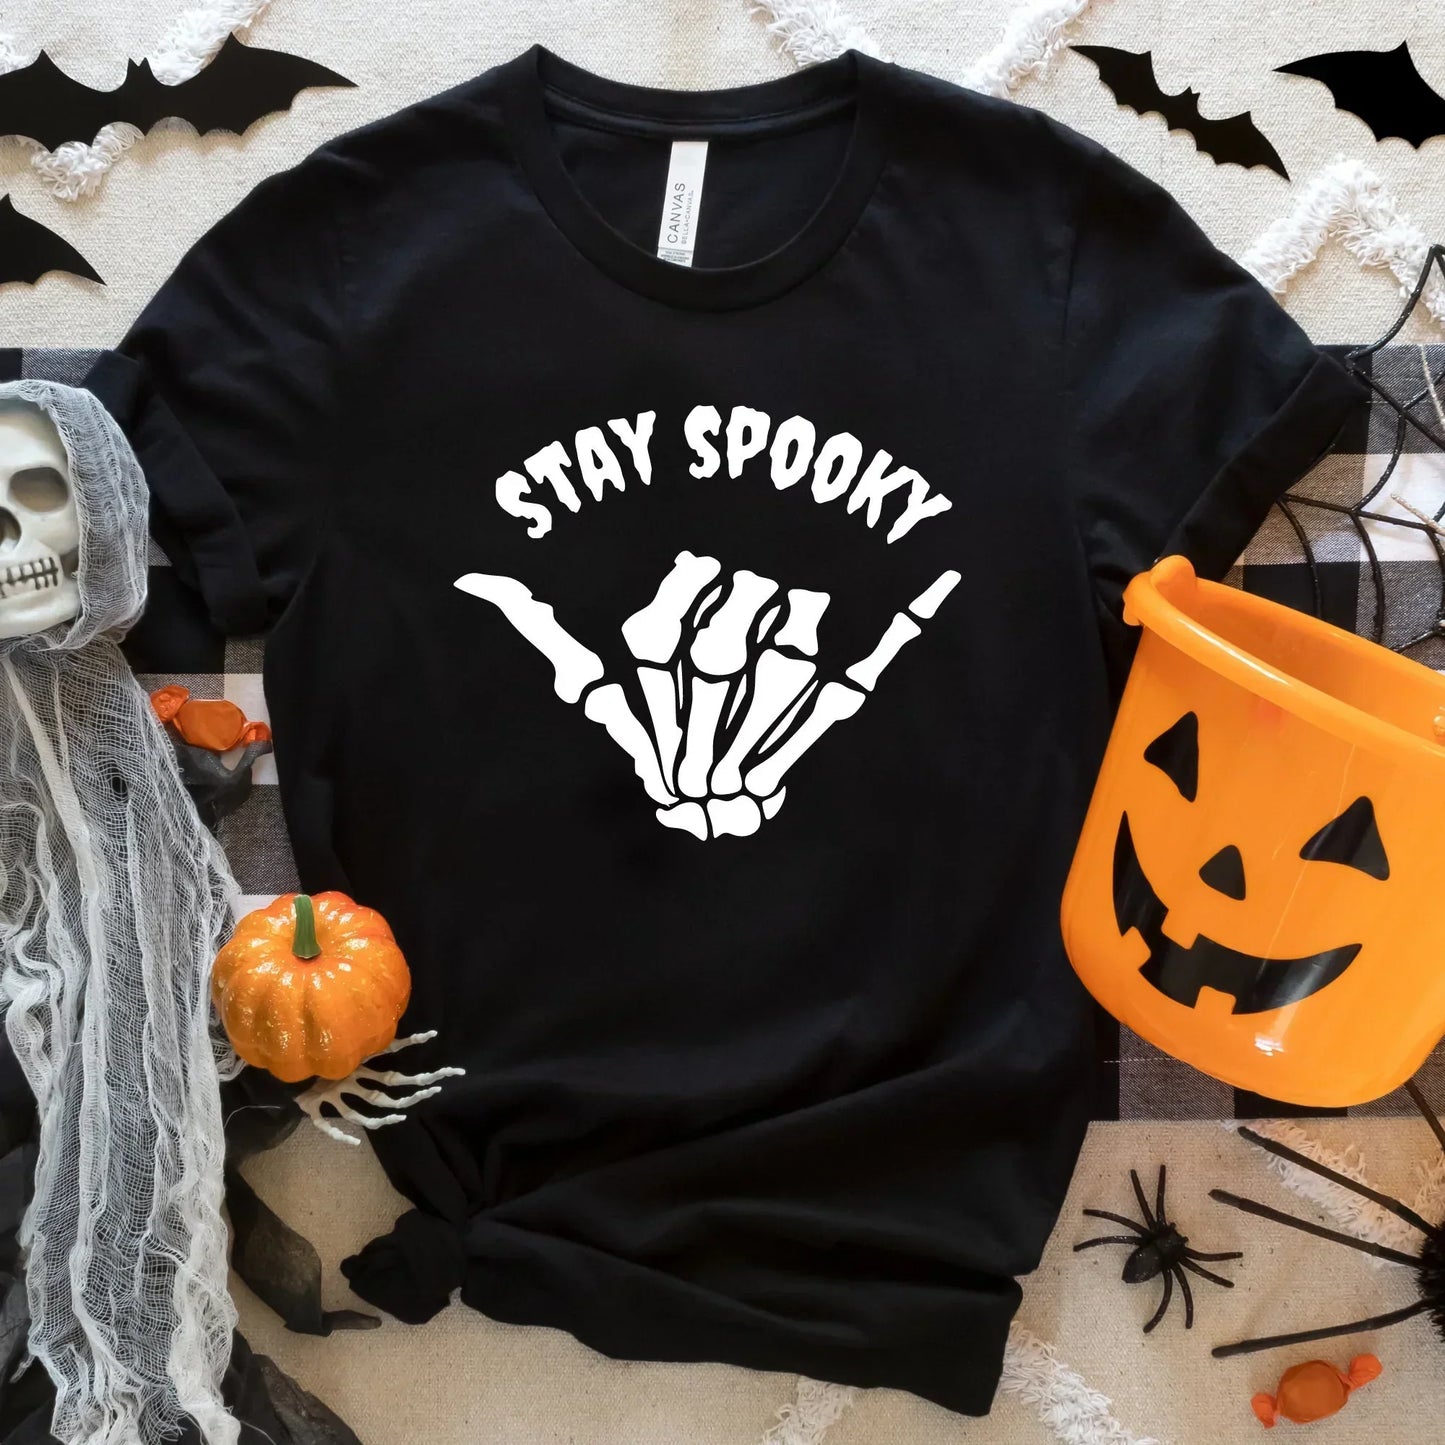 Halloween Sweater, Halloween Crewneck, Spooky Vibes, Halloween Party, Horror Shirt Funny Halloween Tshirt, Cute Retro Women's Hoodie